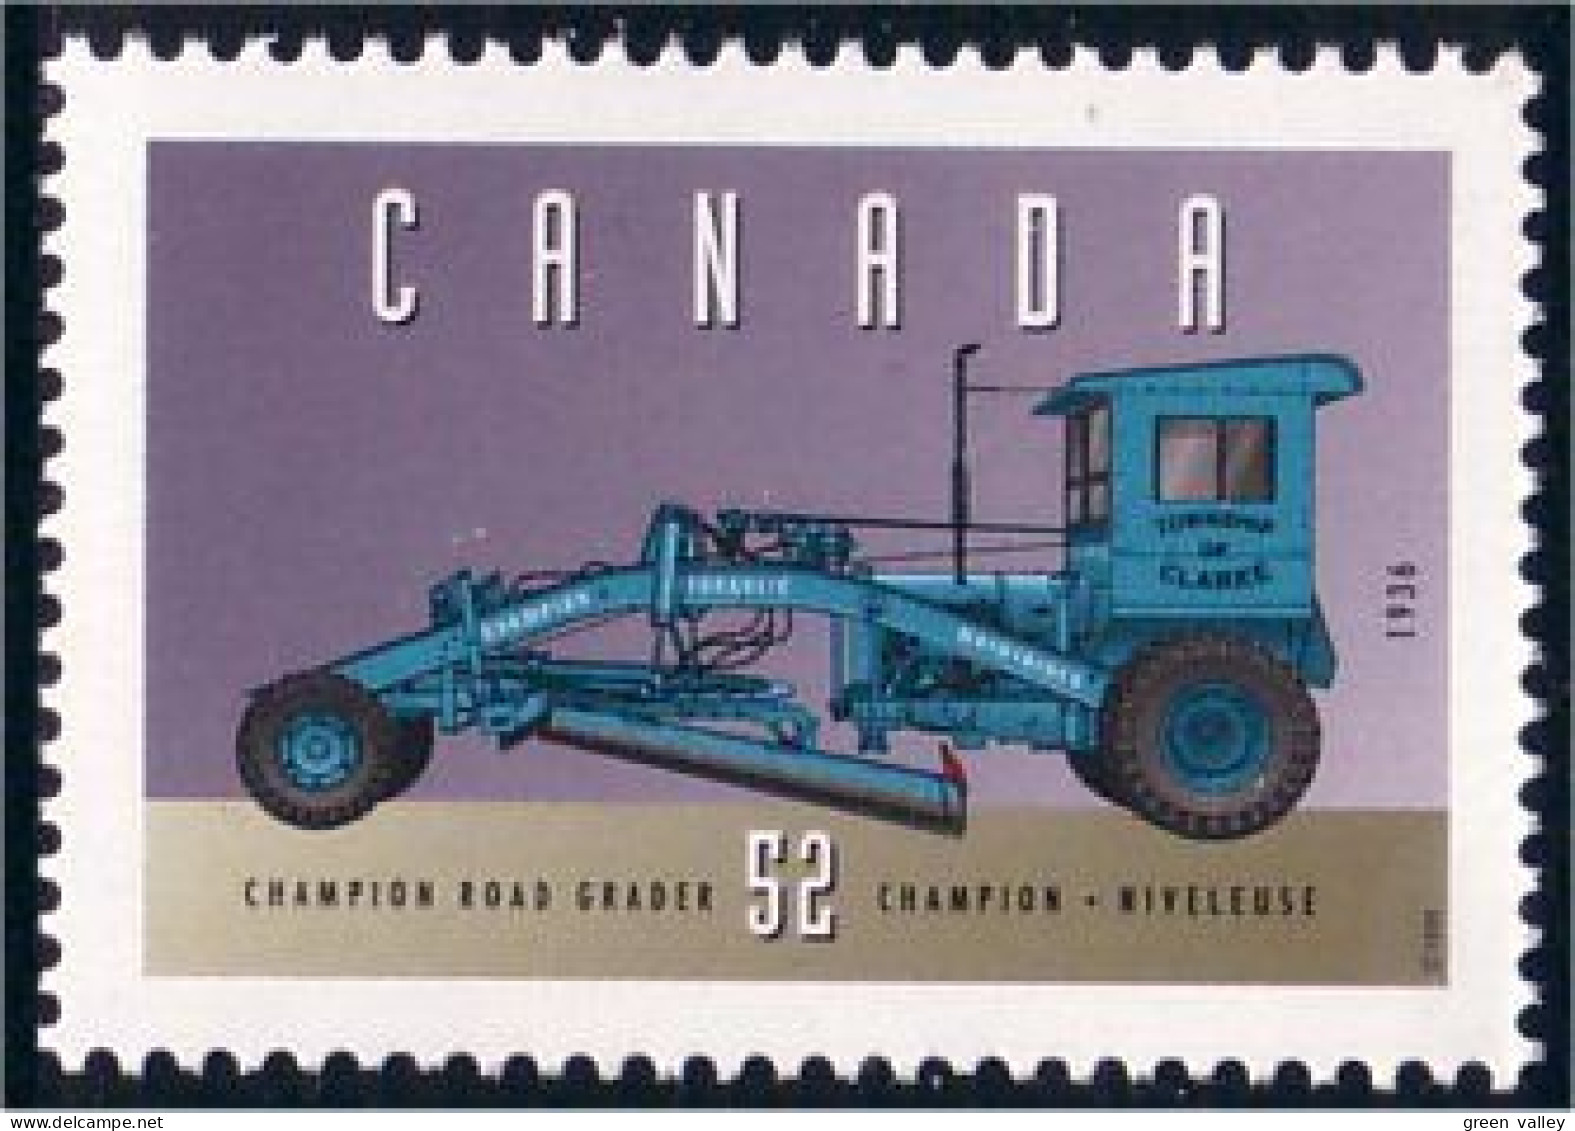 Canada Niveleuse Champion Road Grader MNH ** Neuf SC (C16-04da) - Nuevos